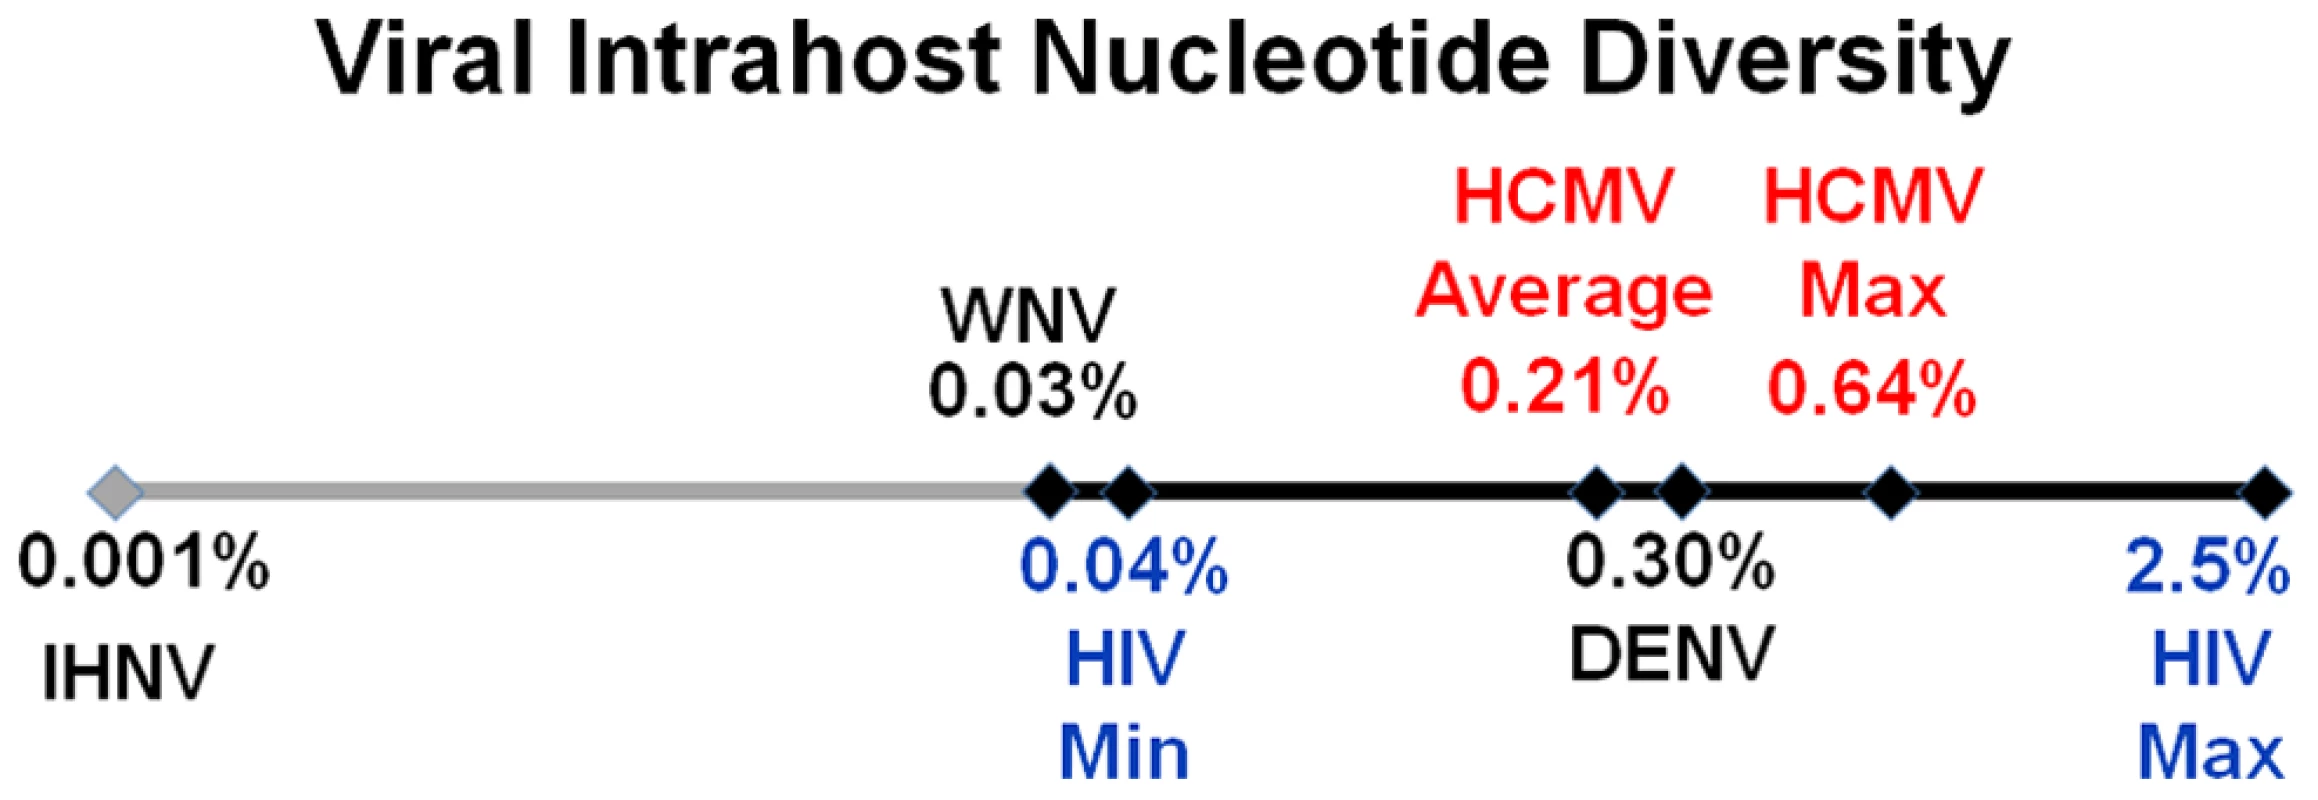 HCMV intrahost diversity is similar to RNA viruses.